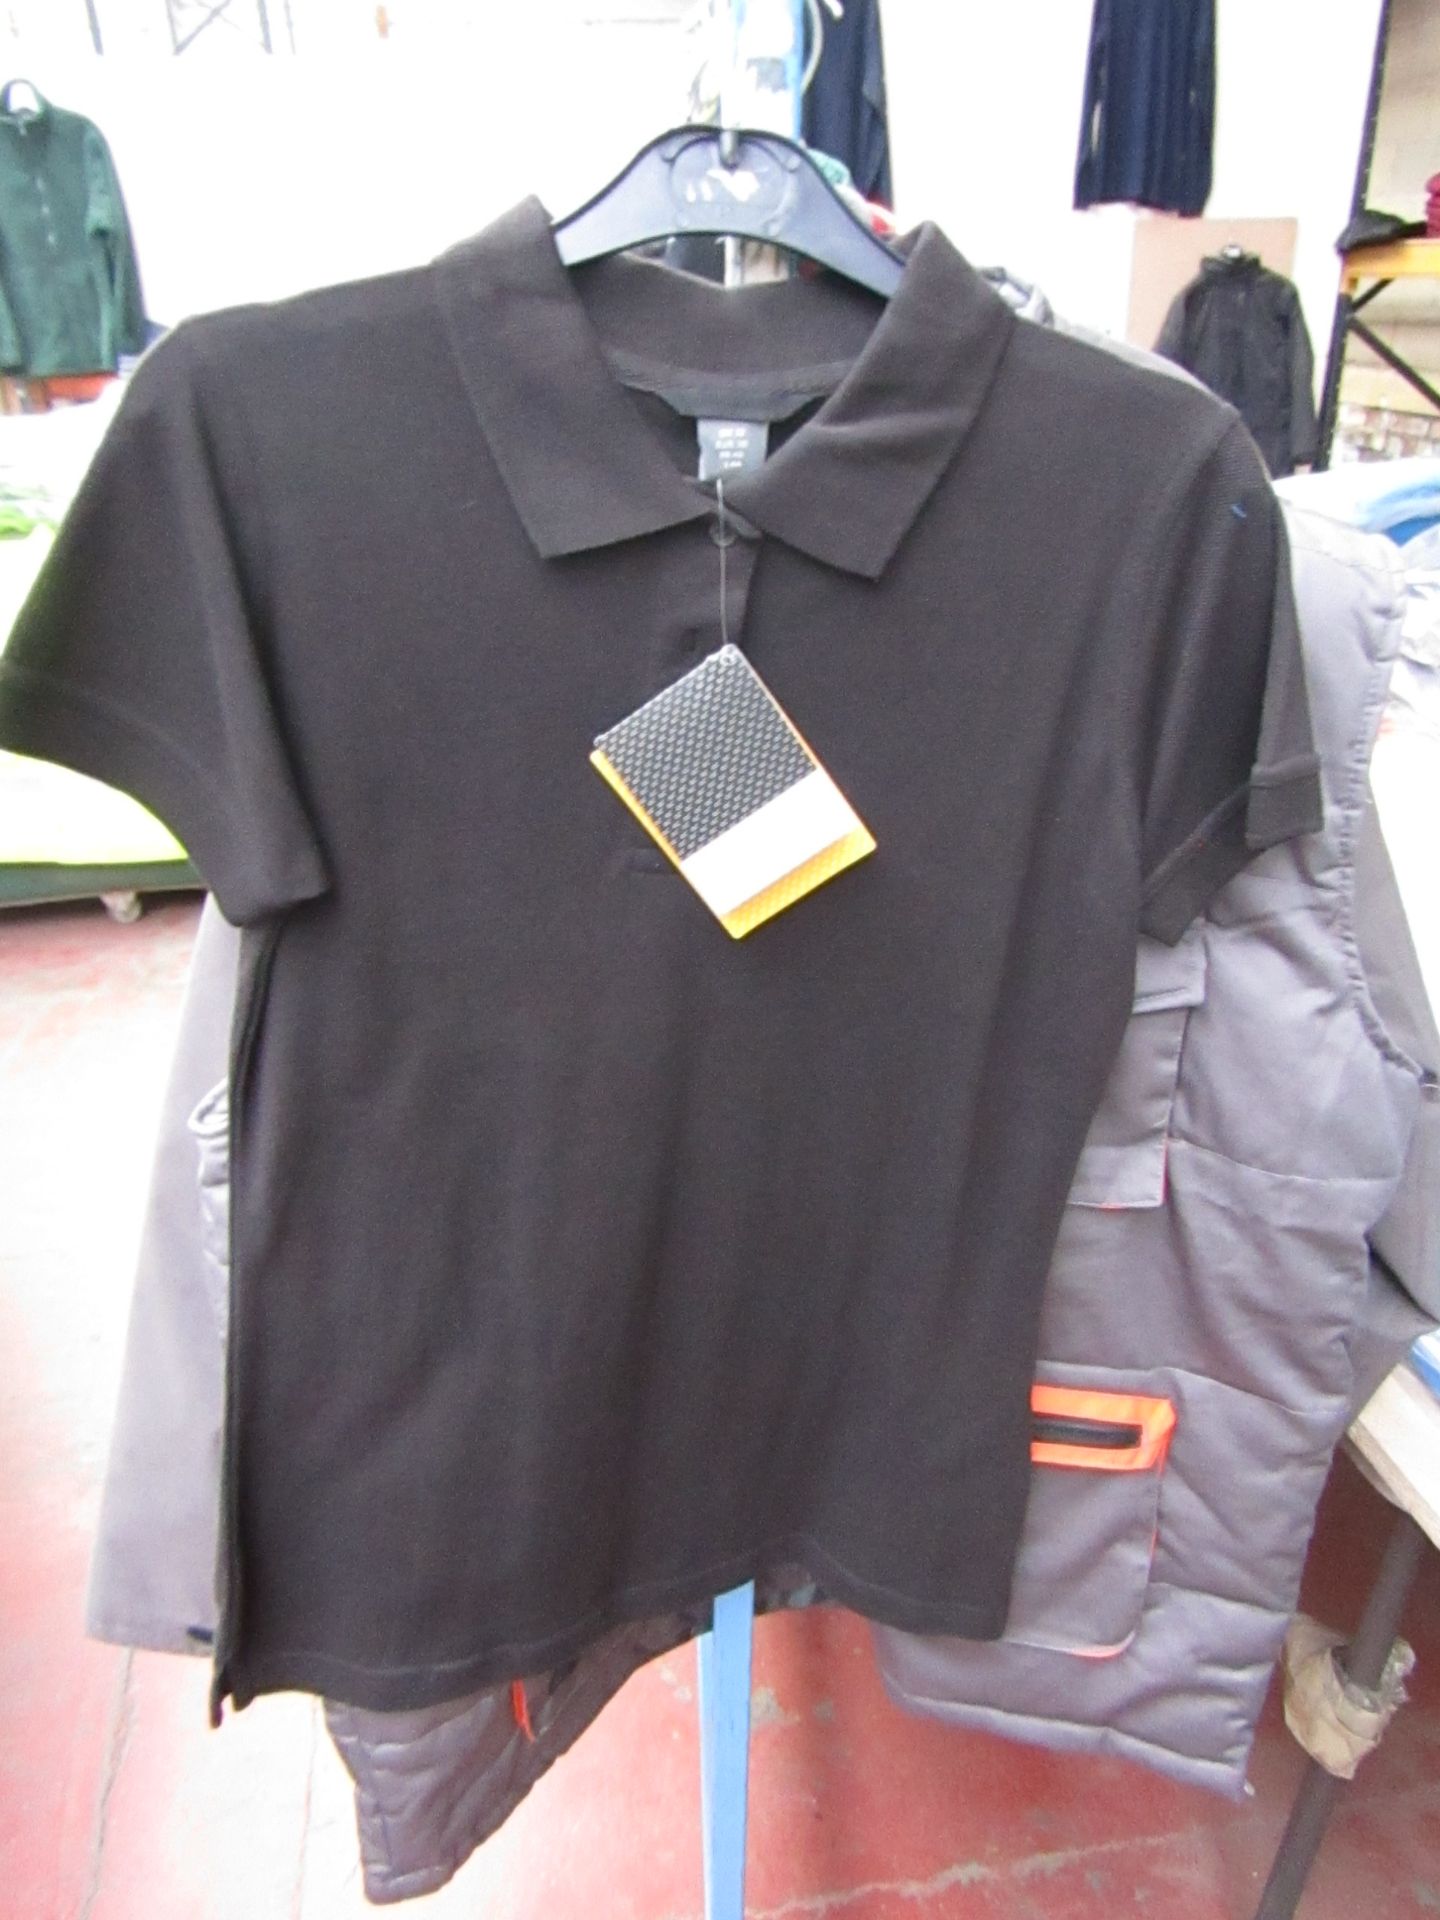 2x Ladies Regatta Black Polo Shirt, Size 16. New in Packaging